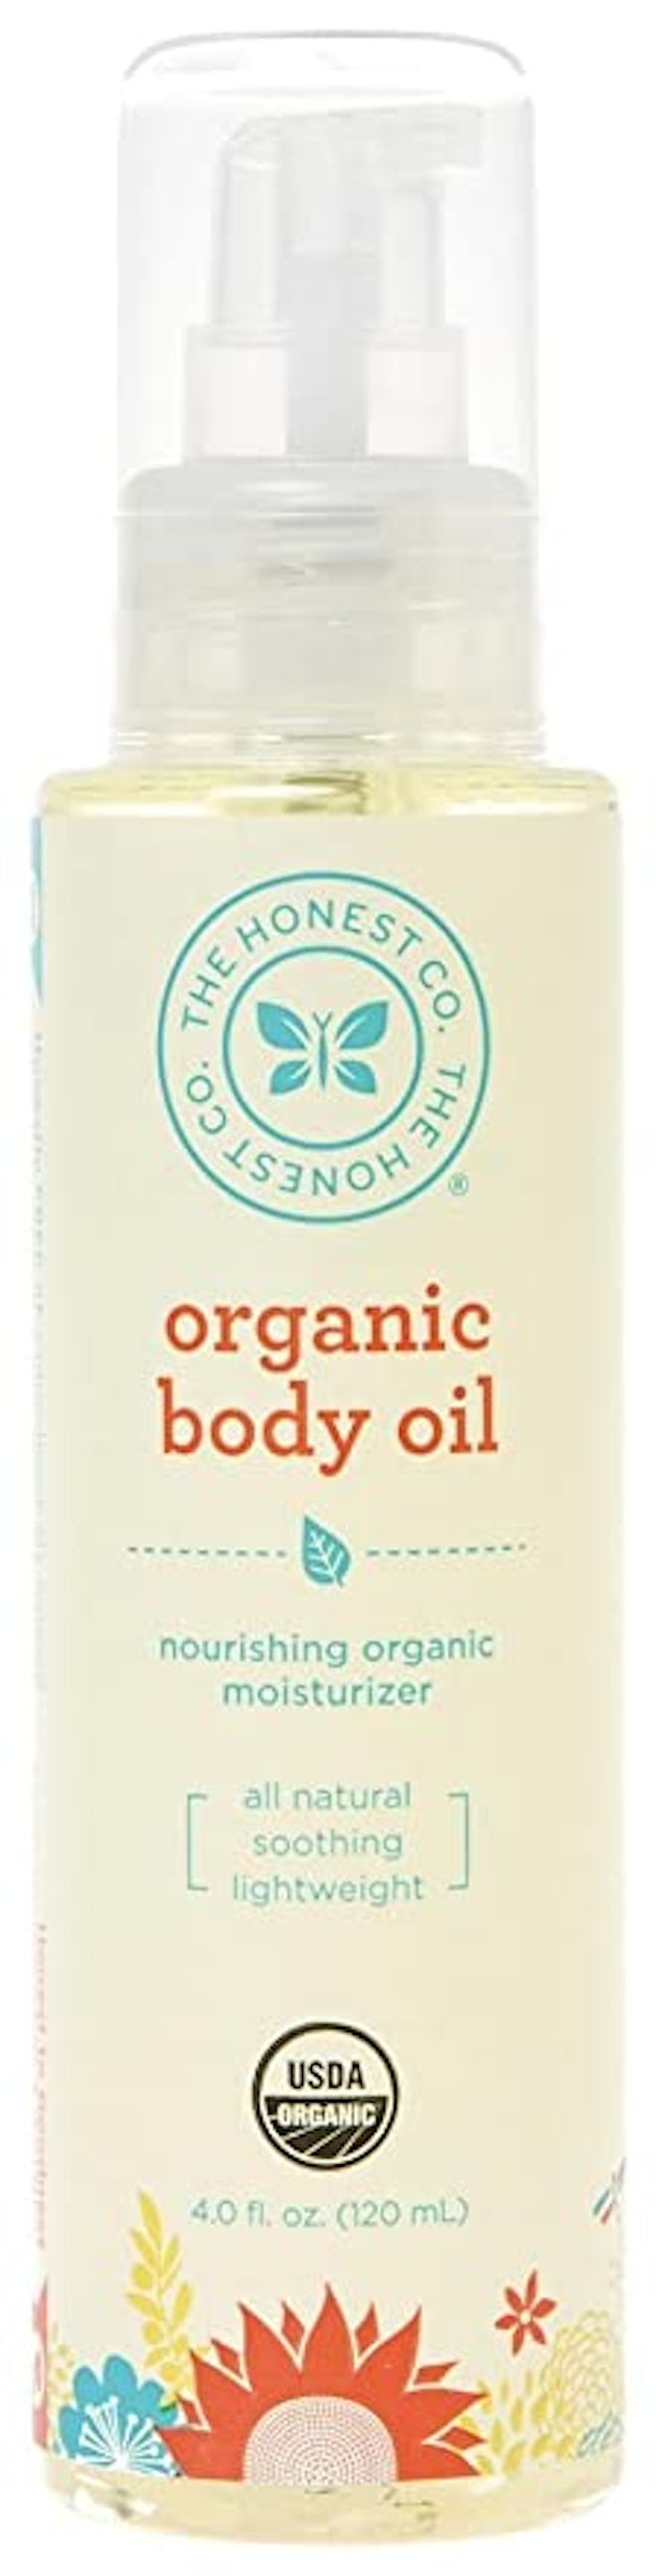 The Honest Company Organic Body Oil